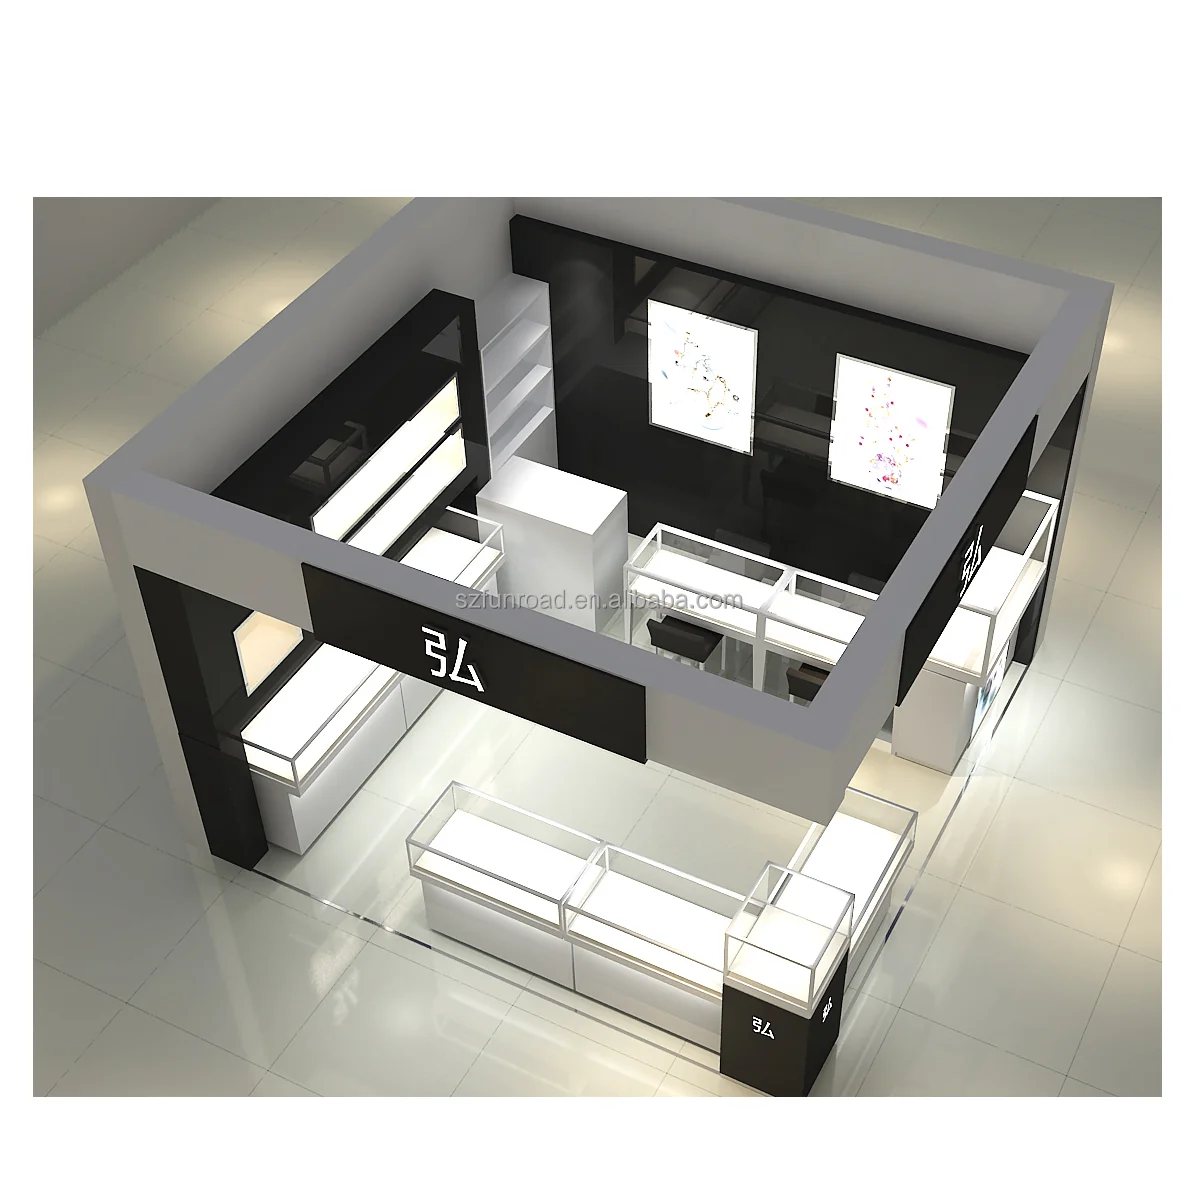 luxury jewelry store display counter furniture / jewelry display kiosk with jewellery shop counter design